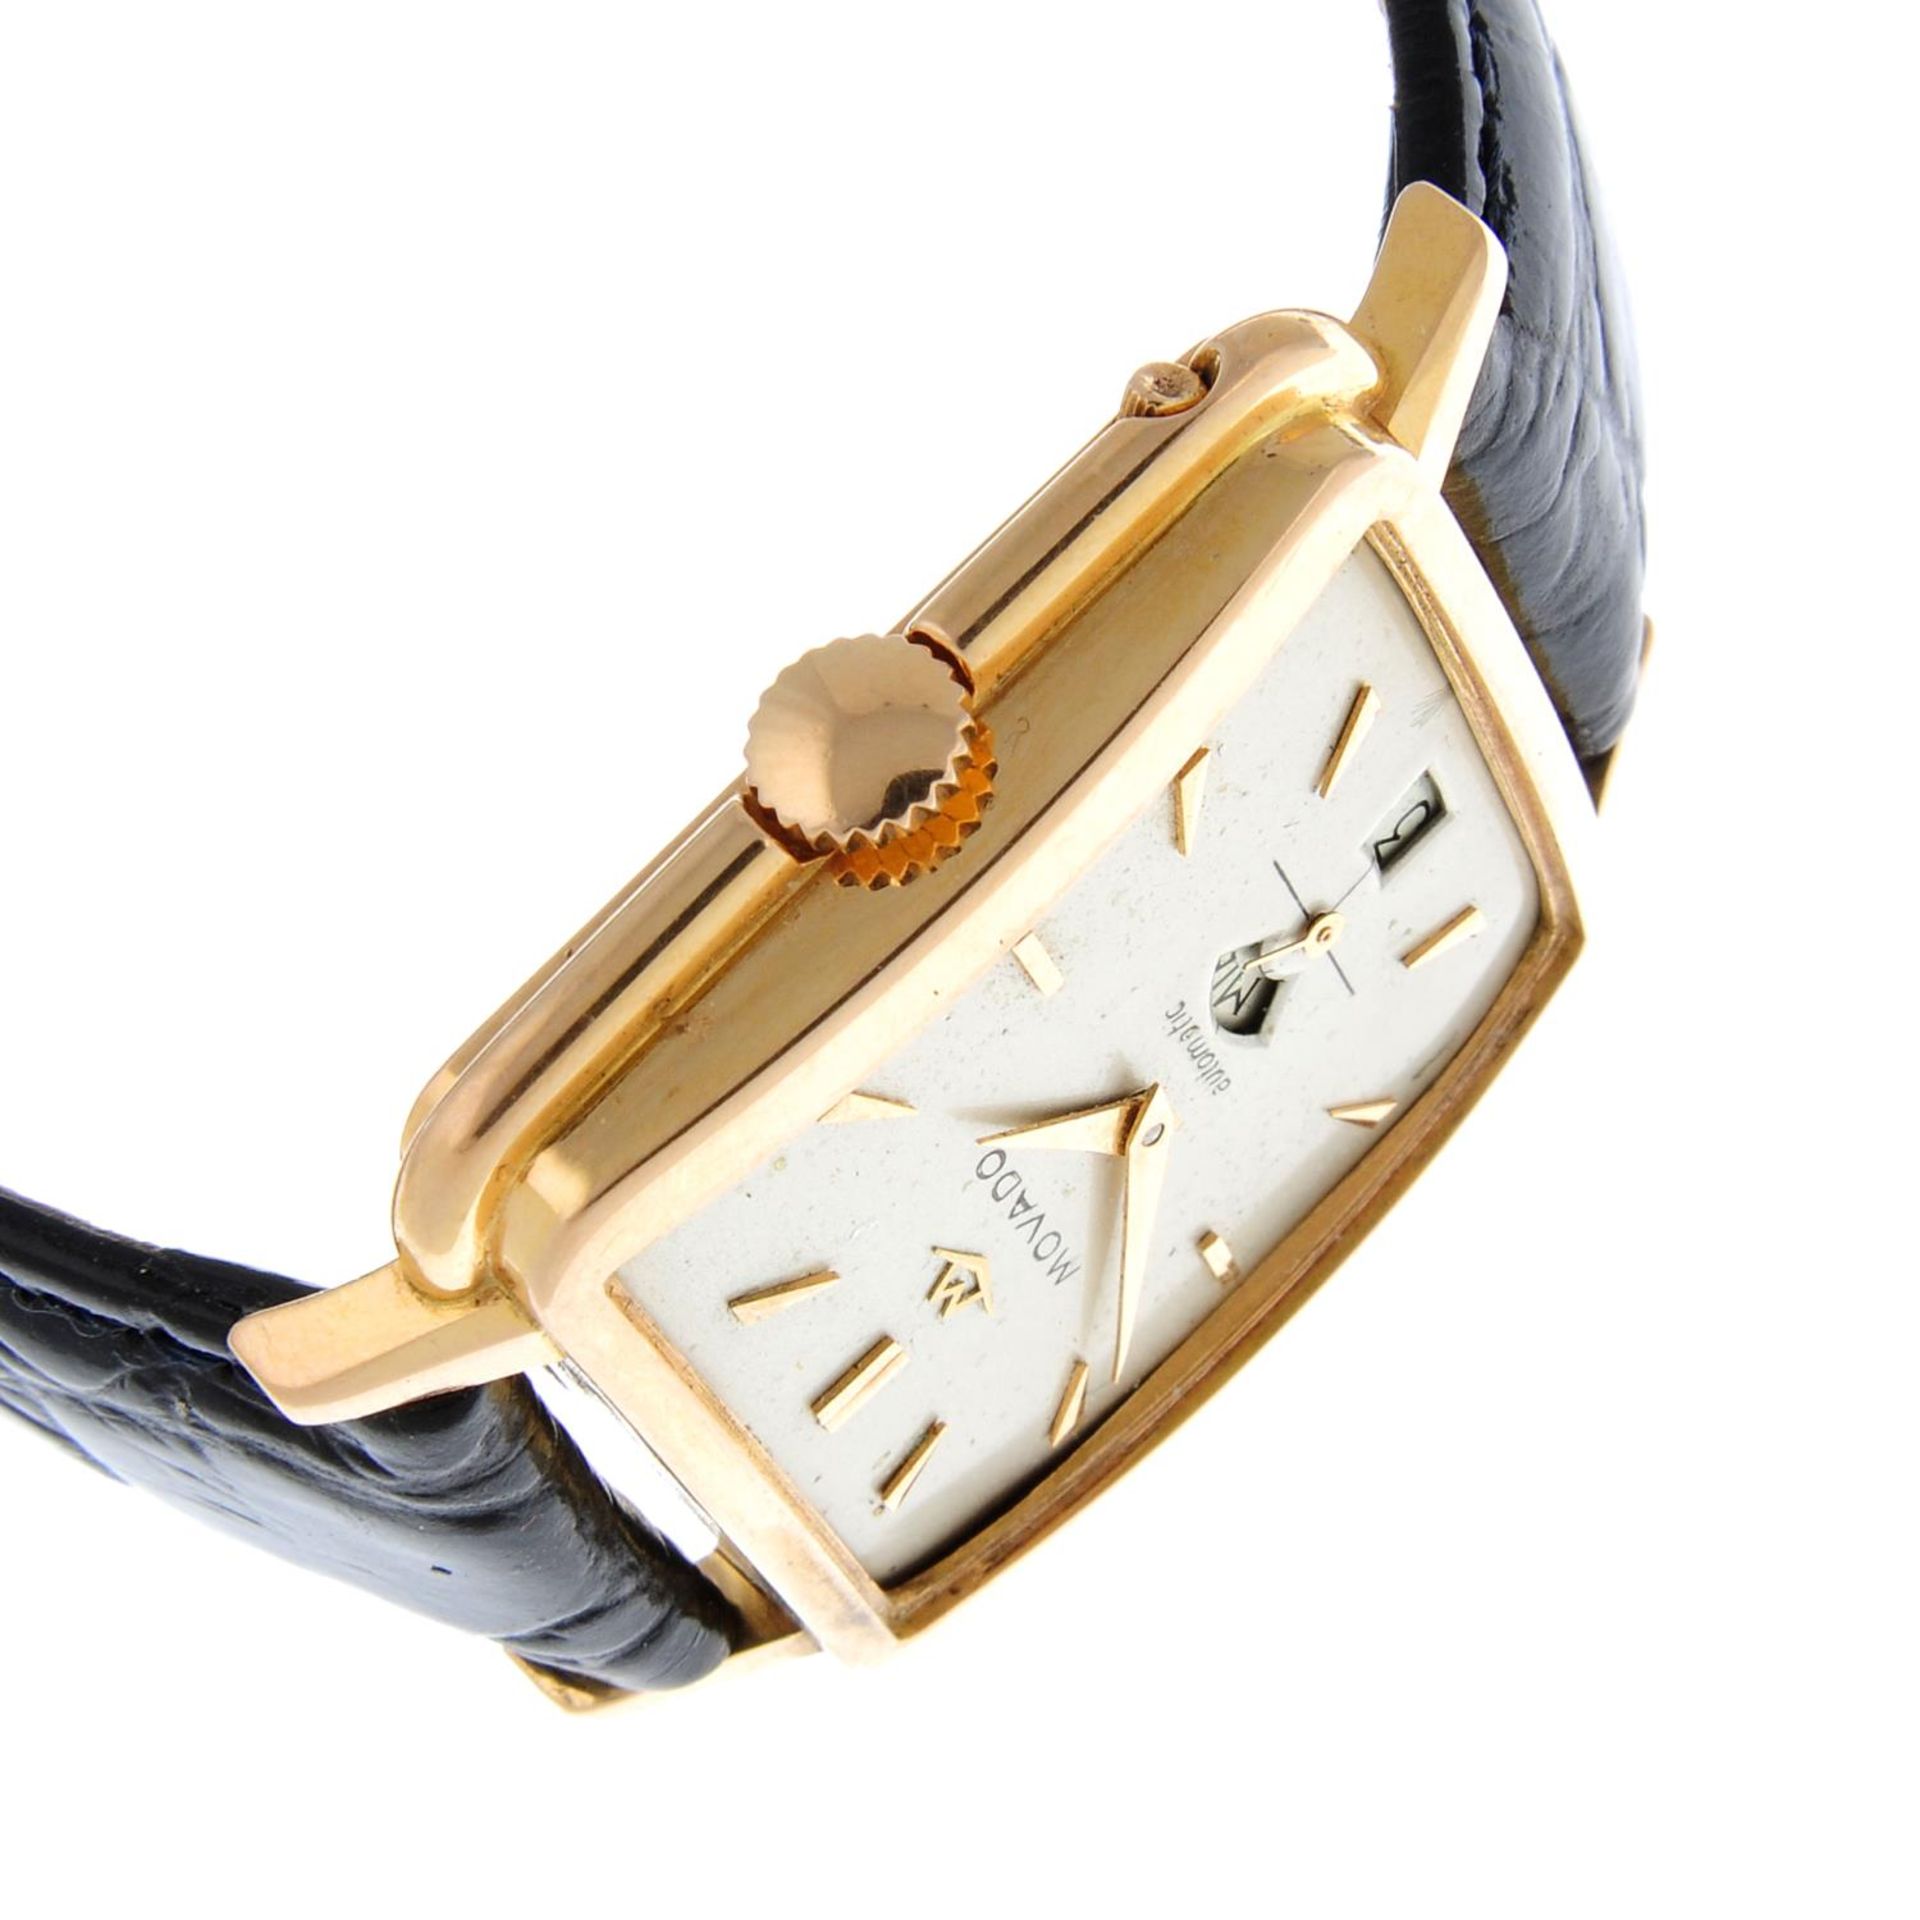 MOVADO - a gentleman's wrist watch. - Image 3 of 4